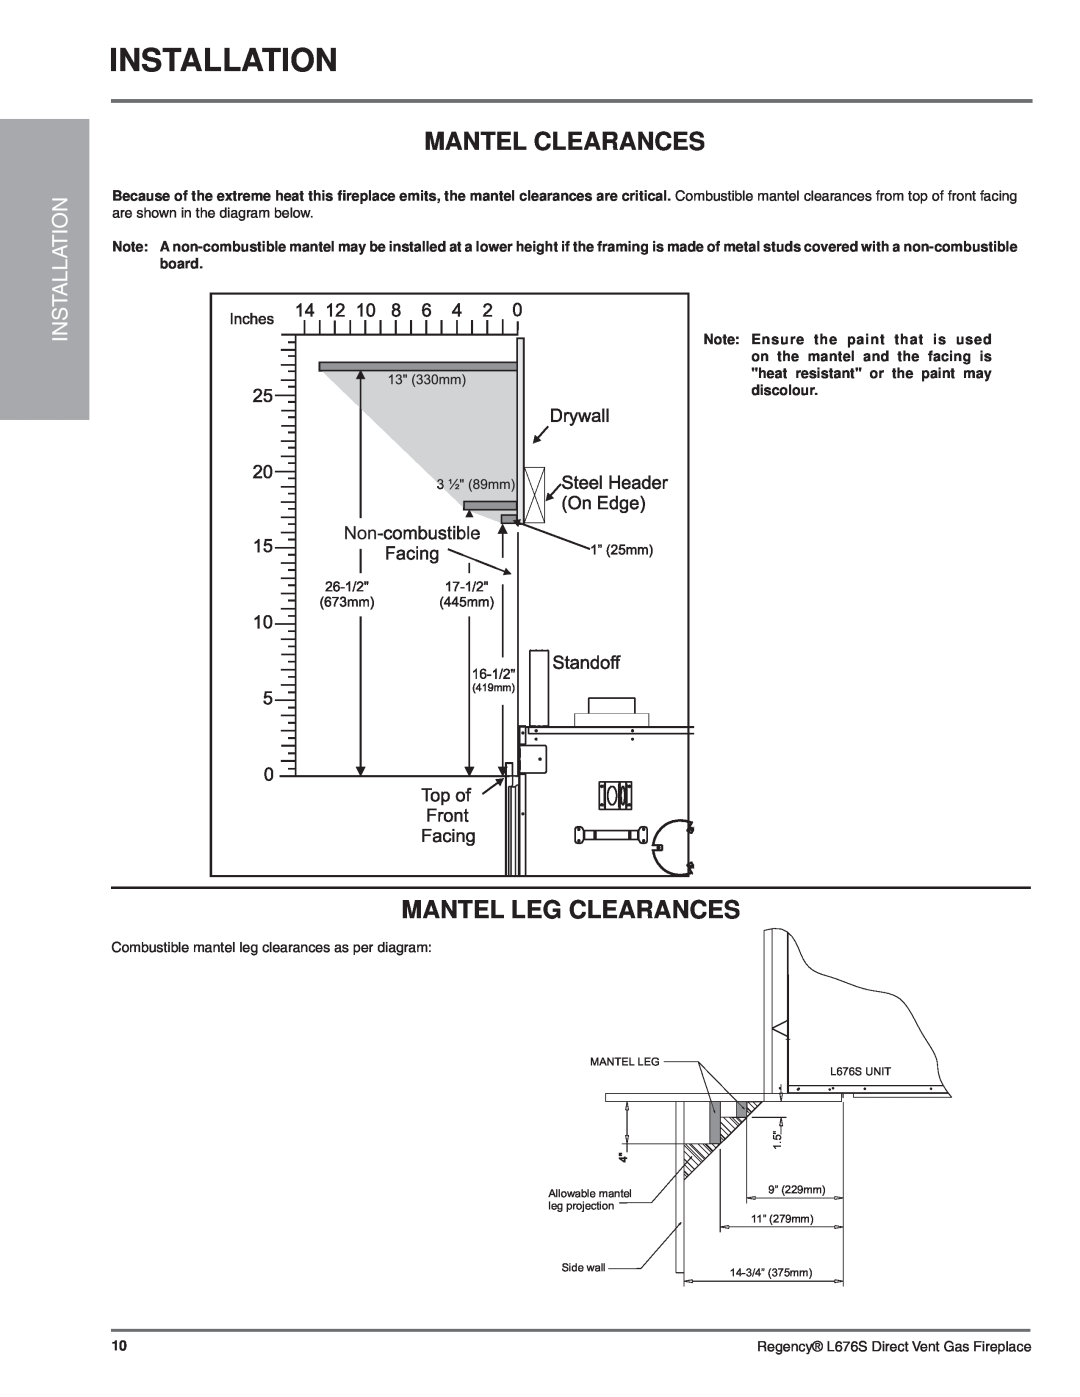 Regency L676S-NG1 installation manual Installation, Mantel Clearances, Mantel Leg Clearances 